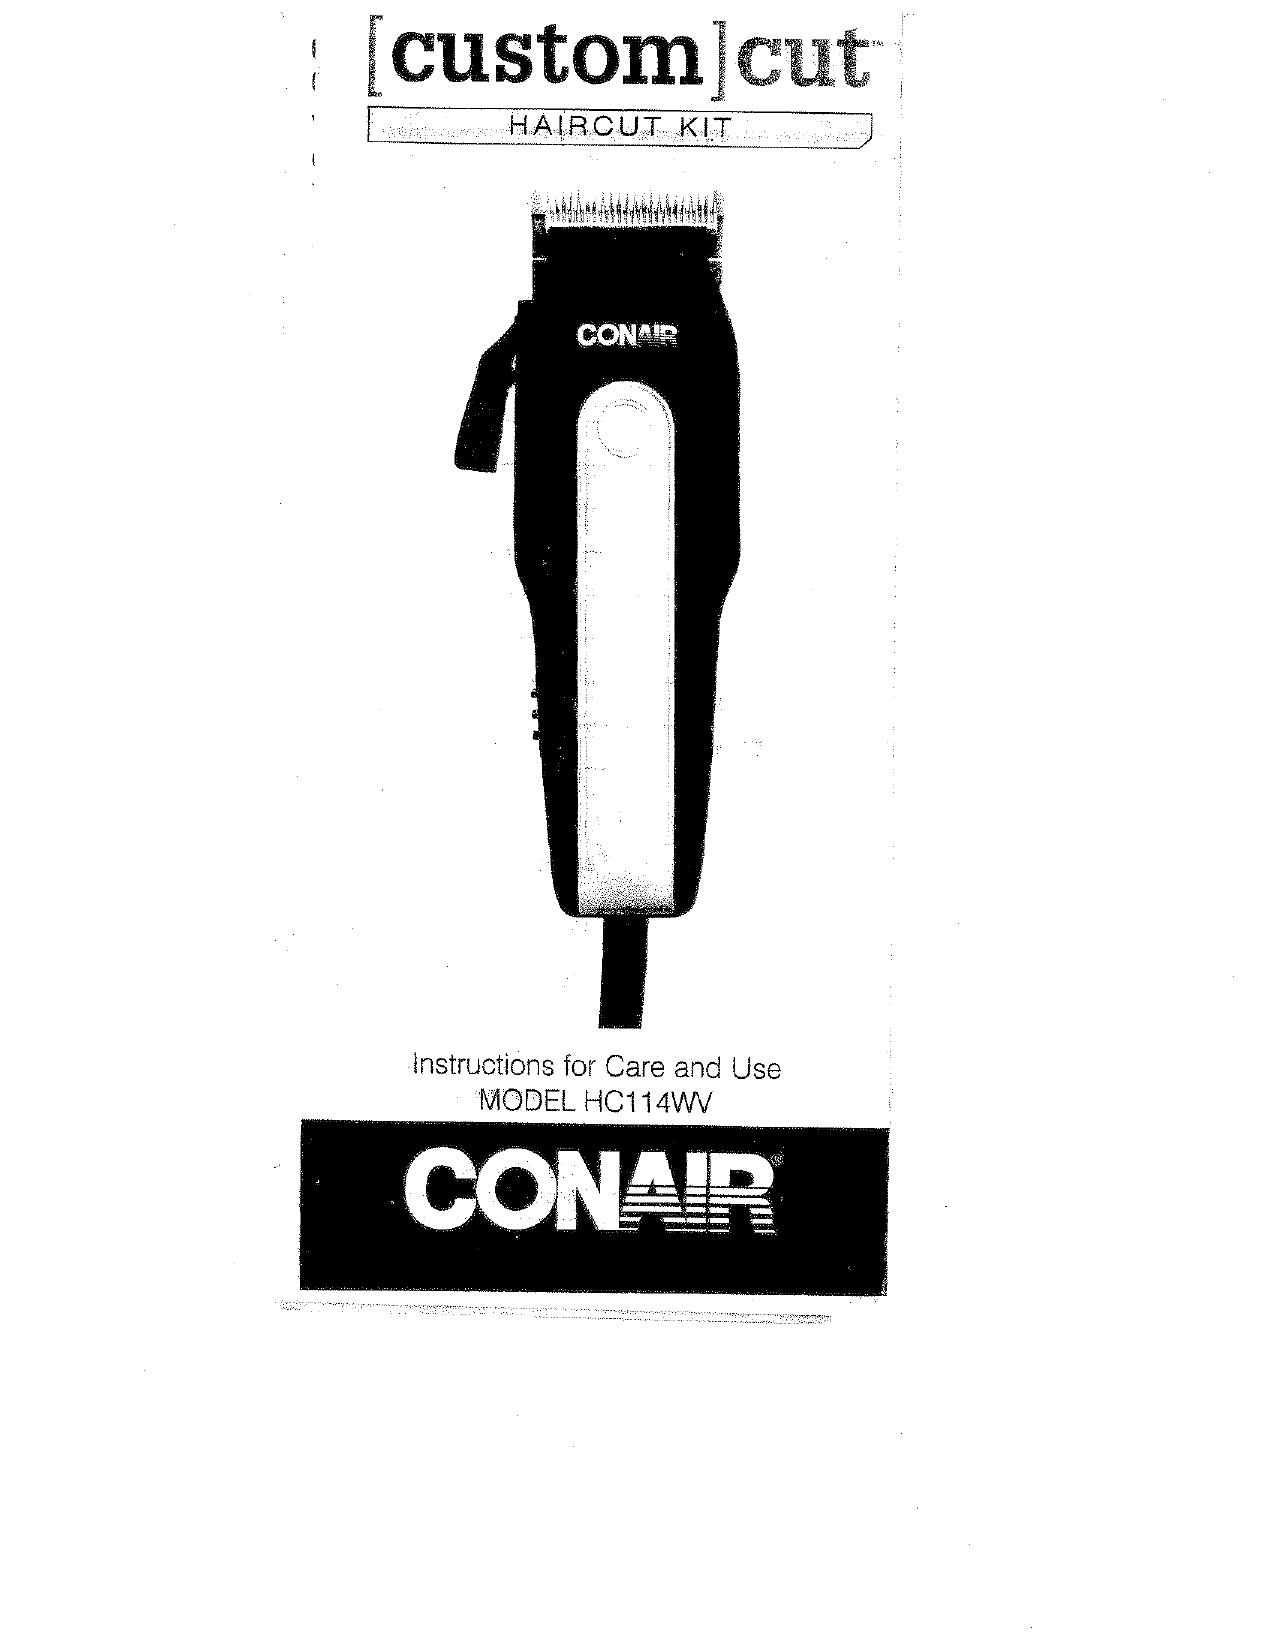 conair clippers model hc114rwv